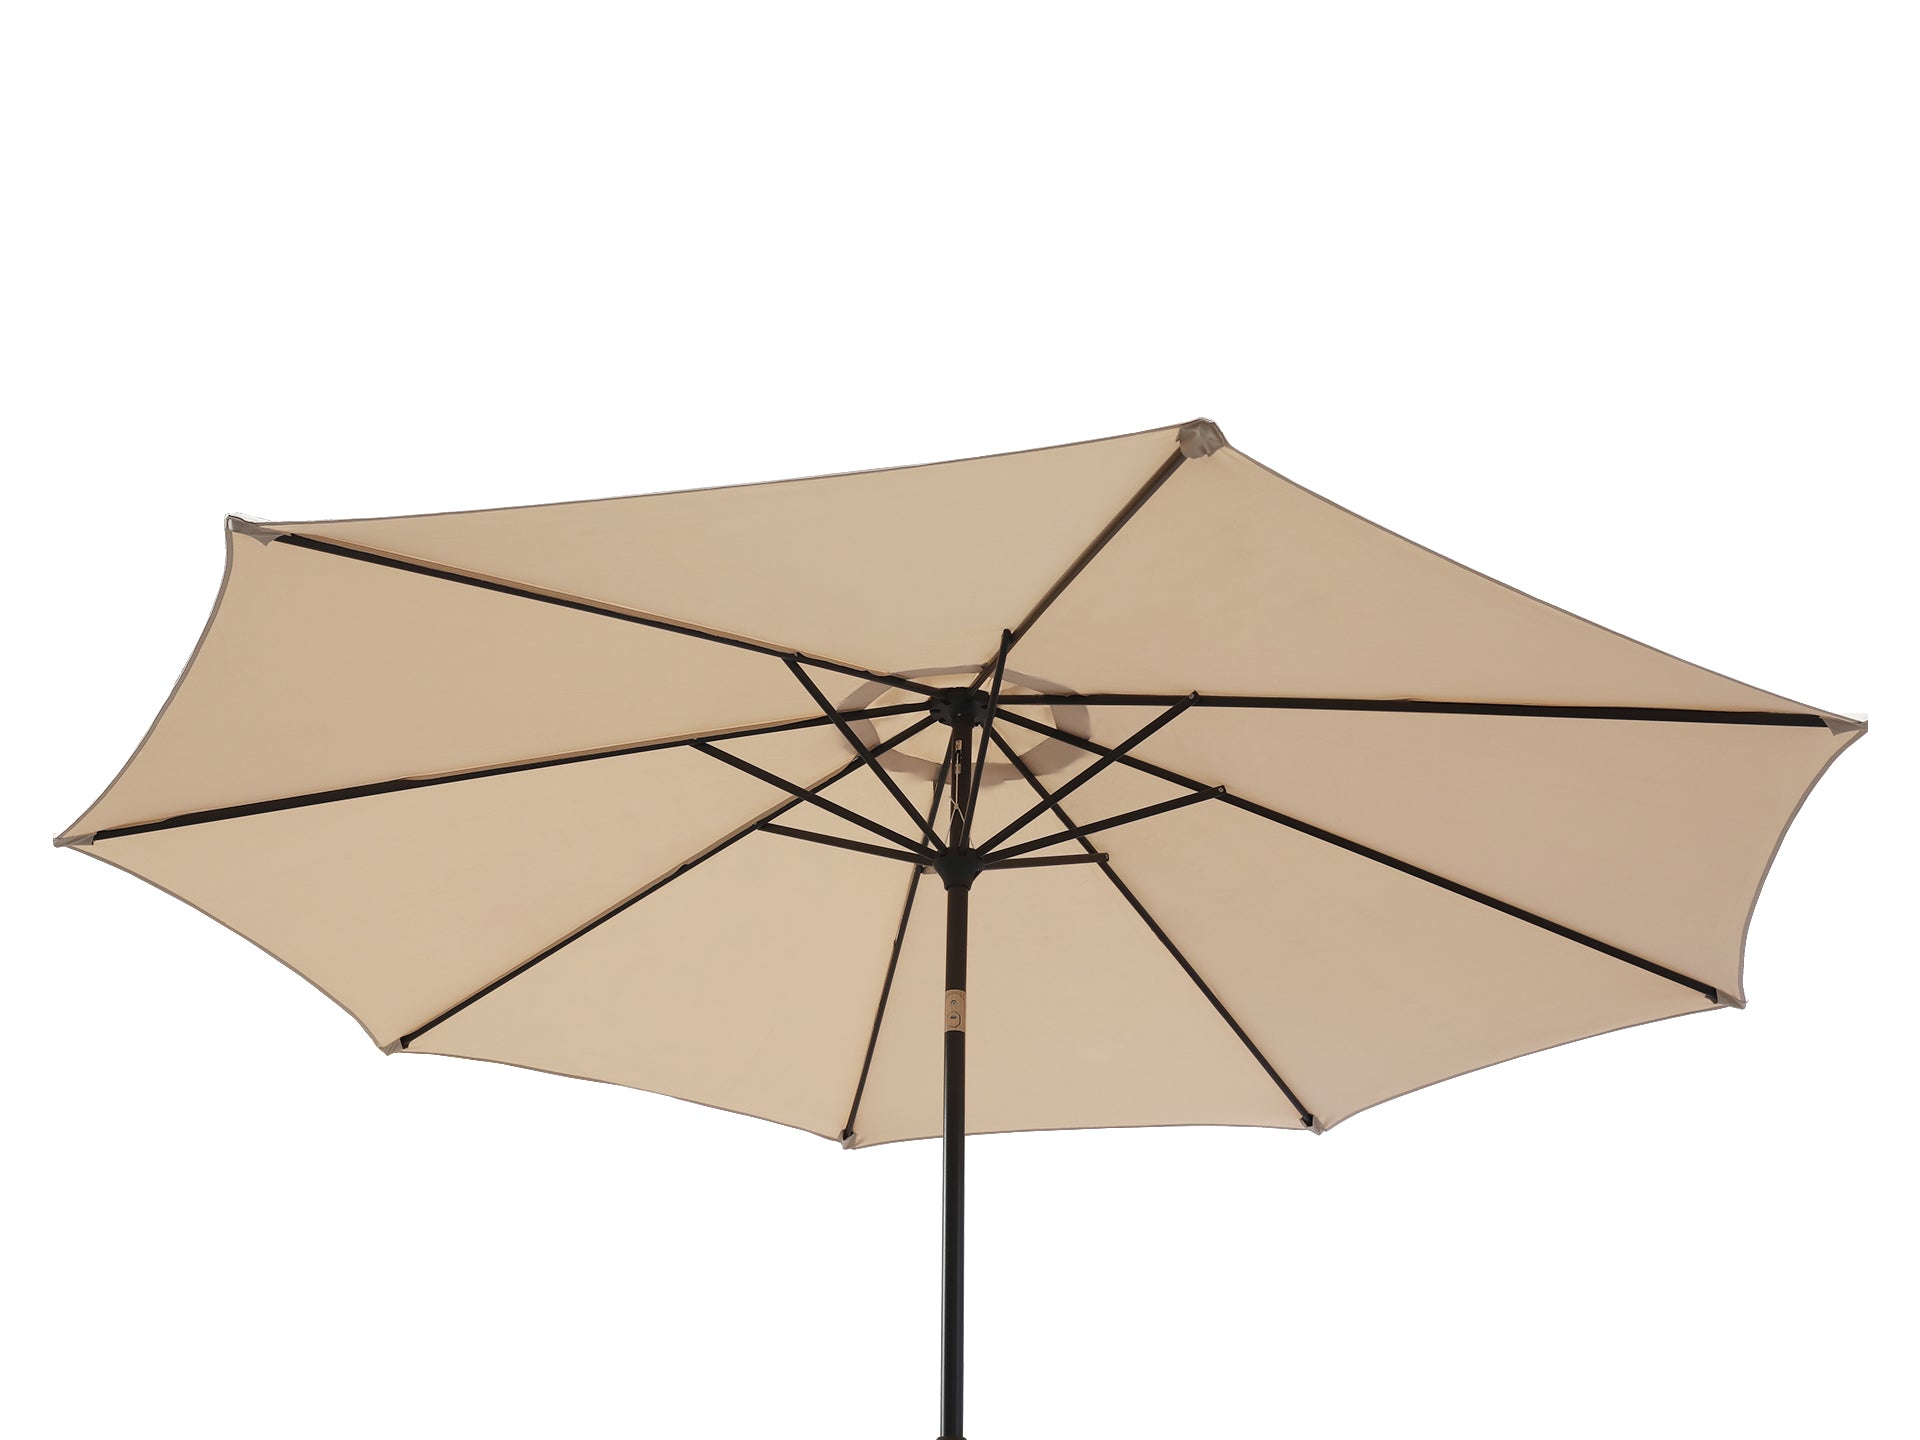 TOUGHOUT Rimu Outdoor Umbrella 3m